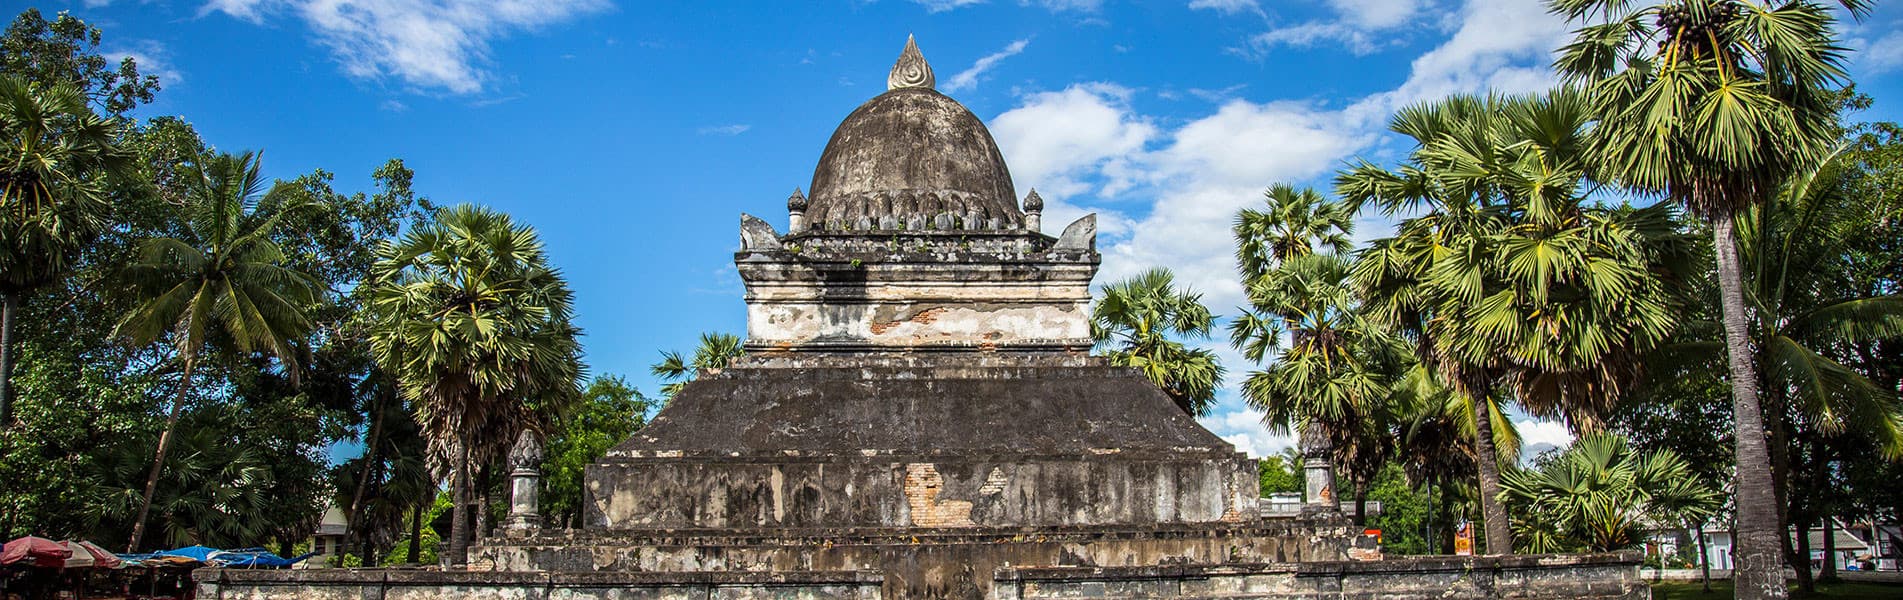 A temple in Luang Prabang